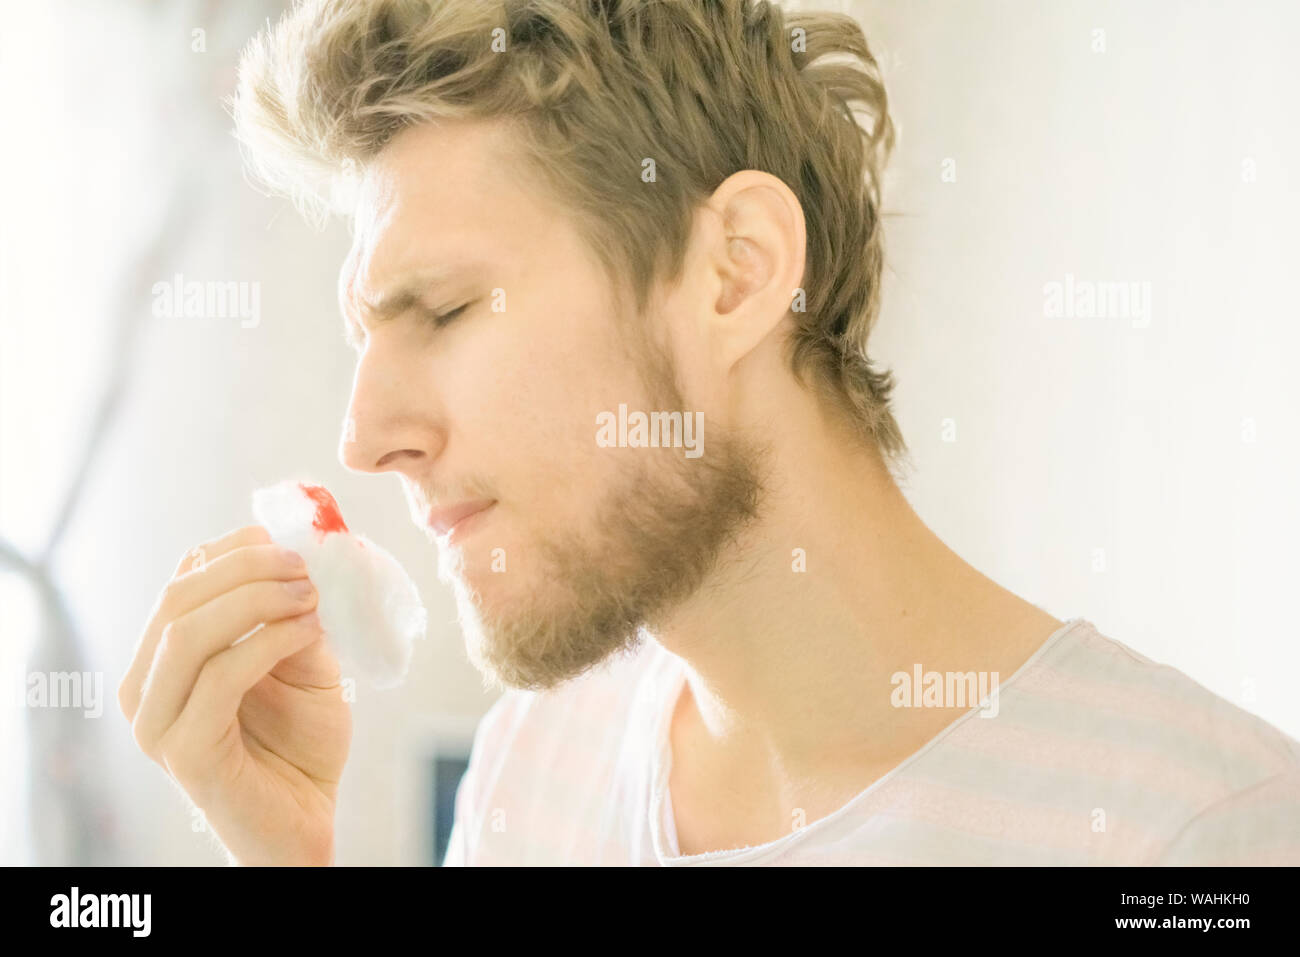 Nahaufnahme bärtigen Mann Porträt leiden unter Nasenbluten mit Watte Tampon  f Stockfotografie - Alamy